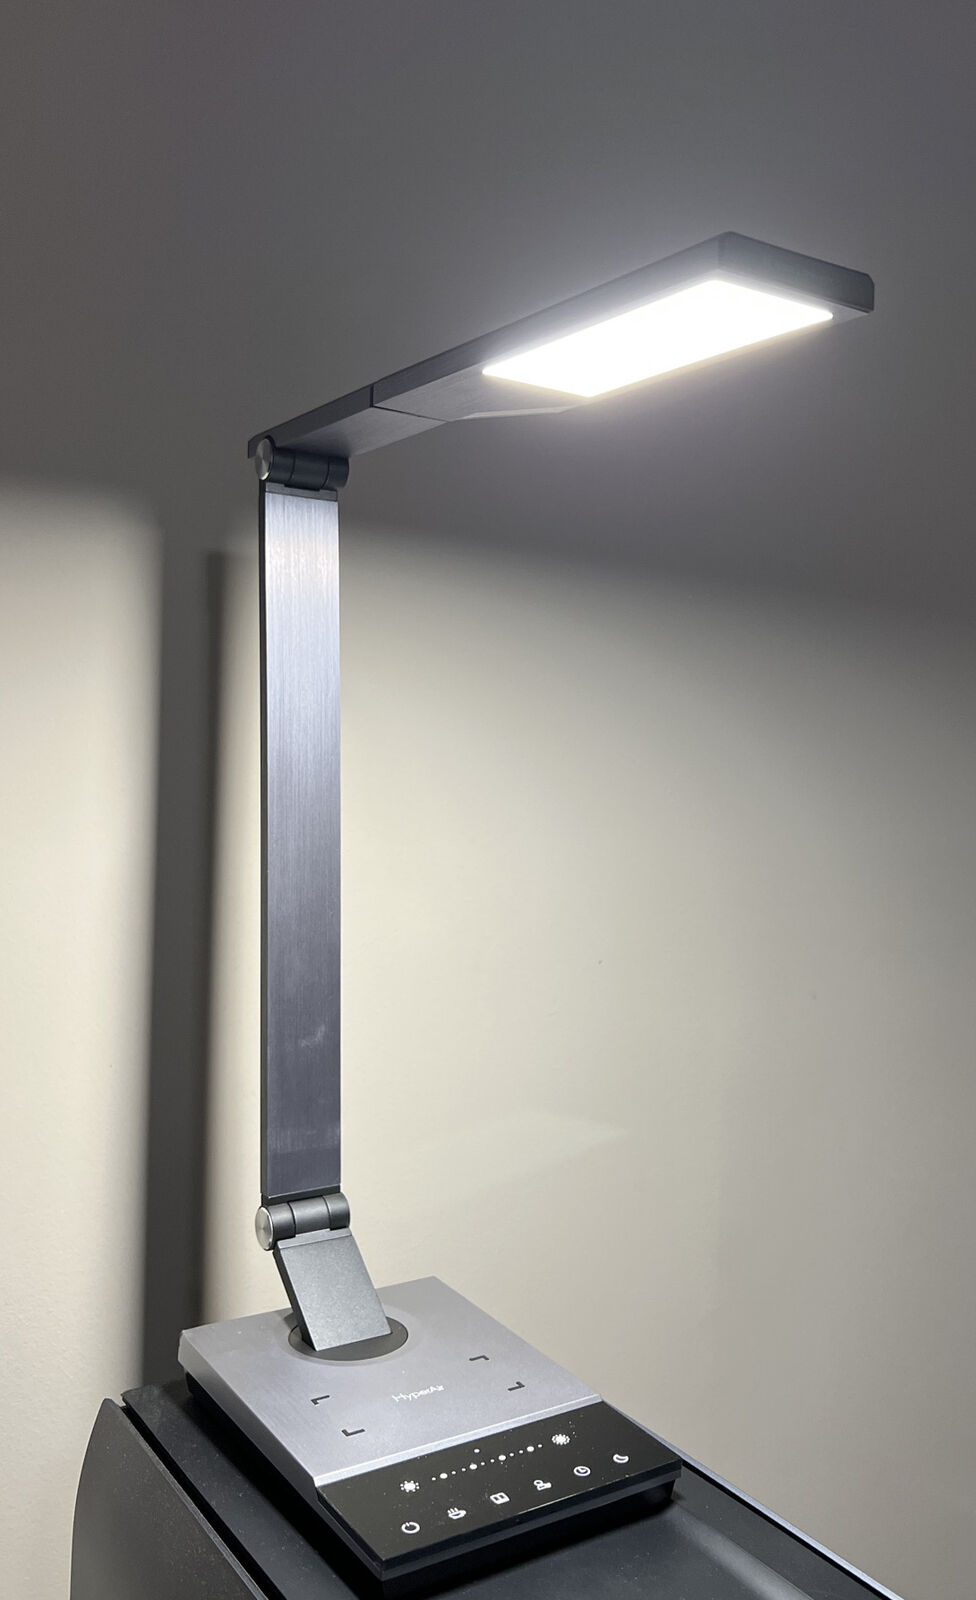 TaoTronics TT-DL093 Led Desk Lamp with Wireless Charging